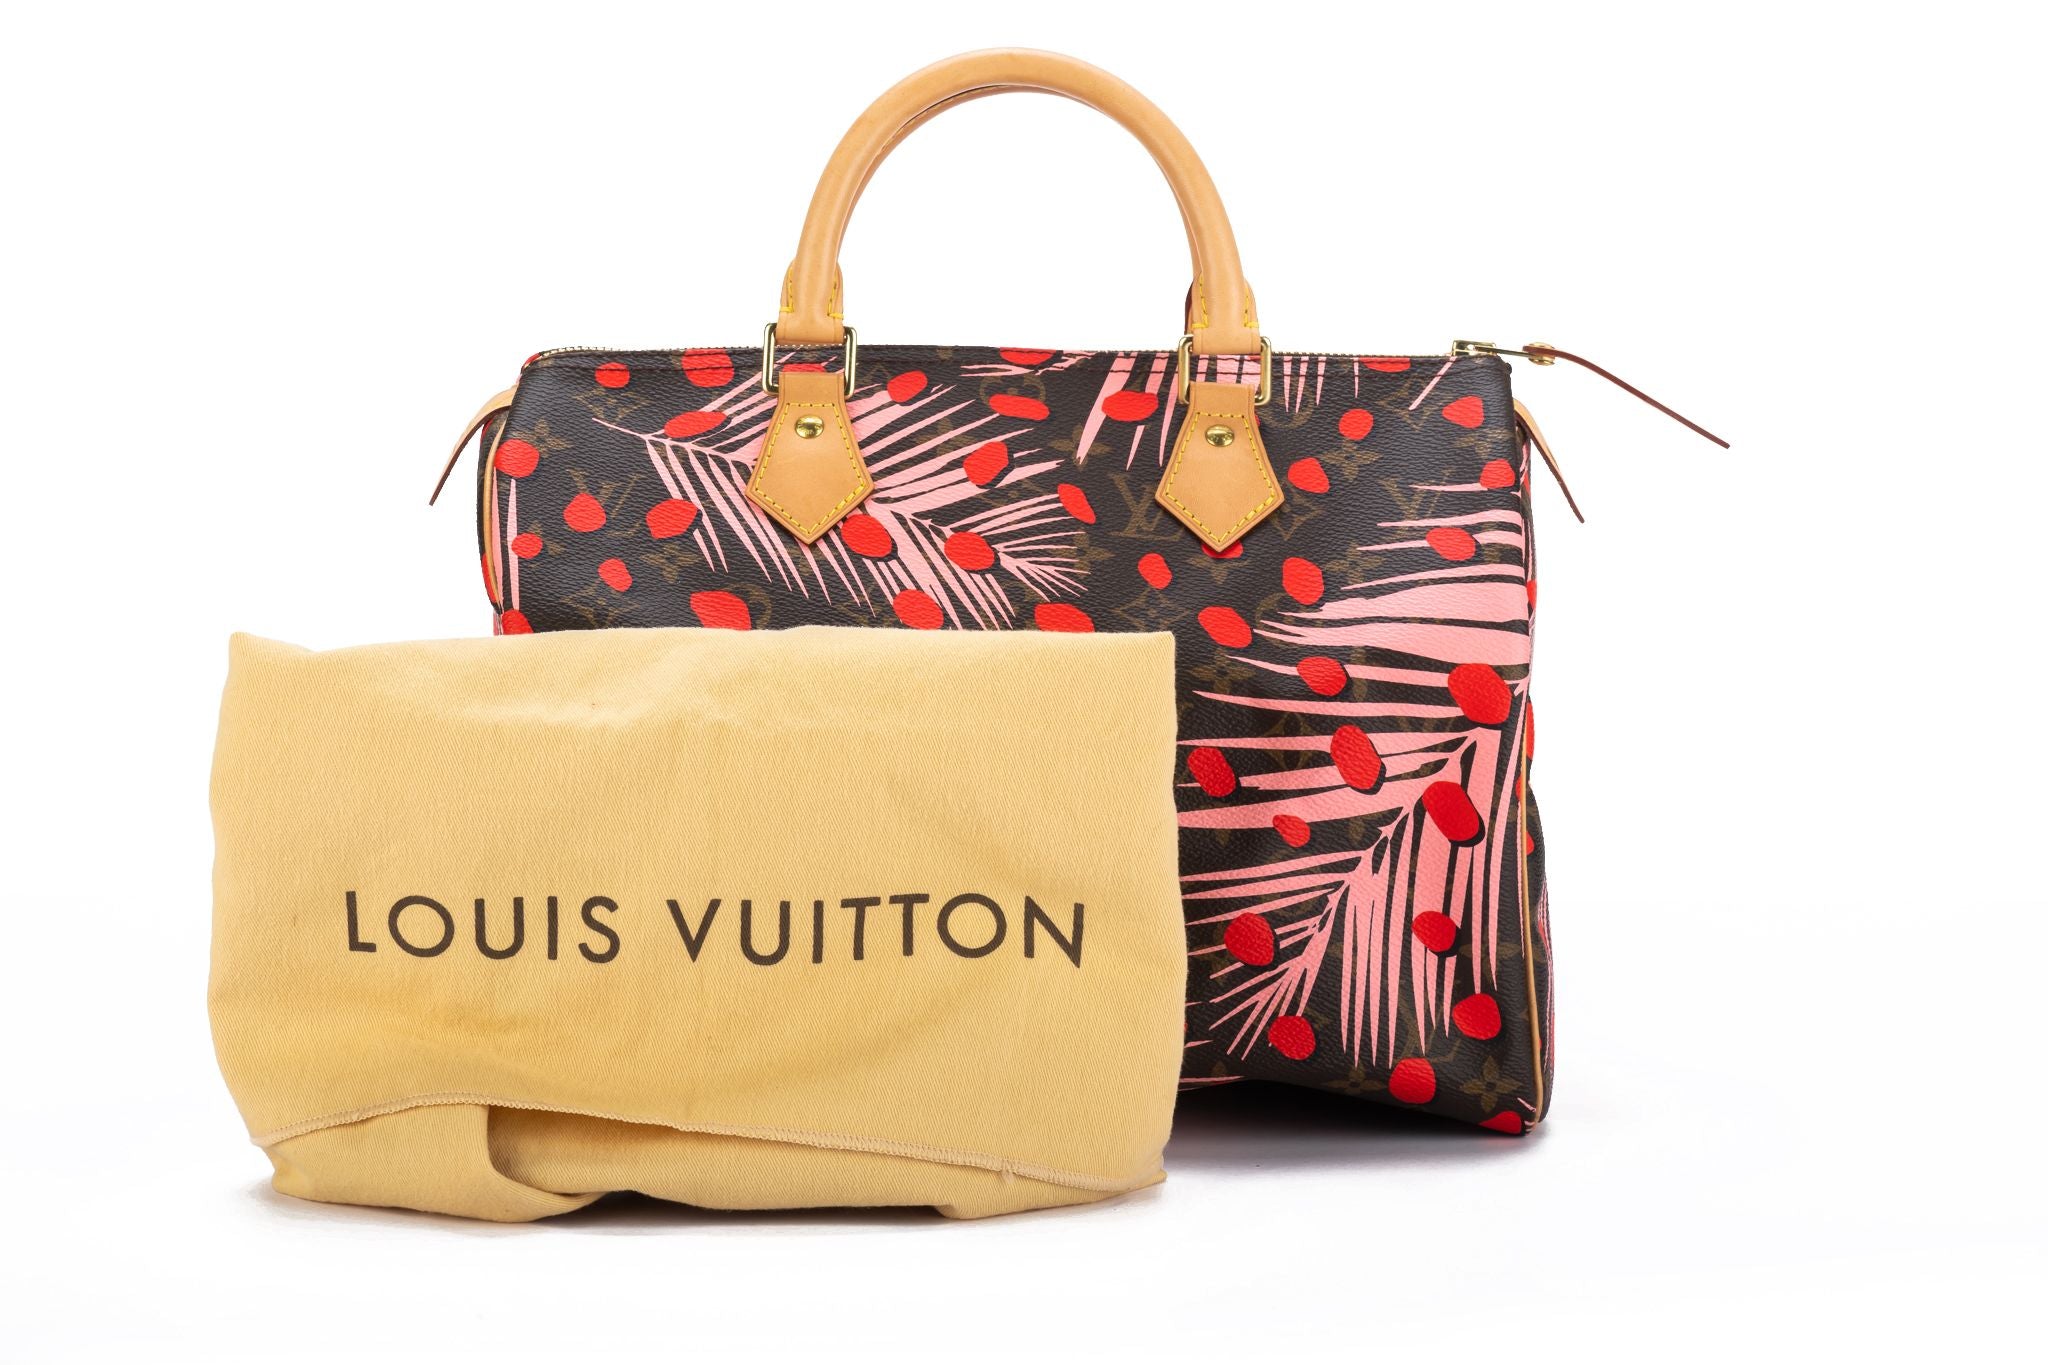 NEW IN BOX, SUPER RARE Louis Vuitton JUNGLE DOTS TOILETRY 26 Pouch